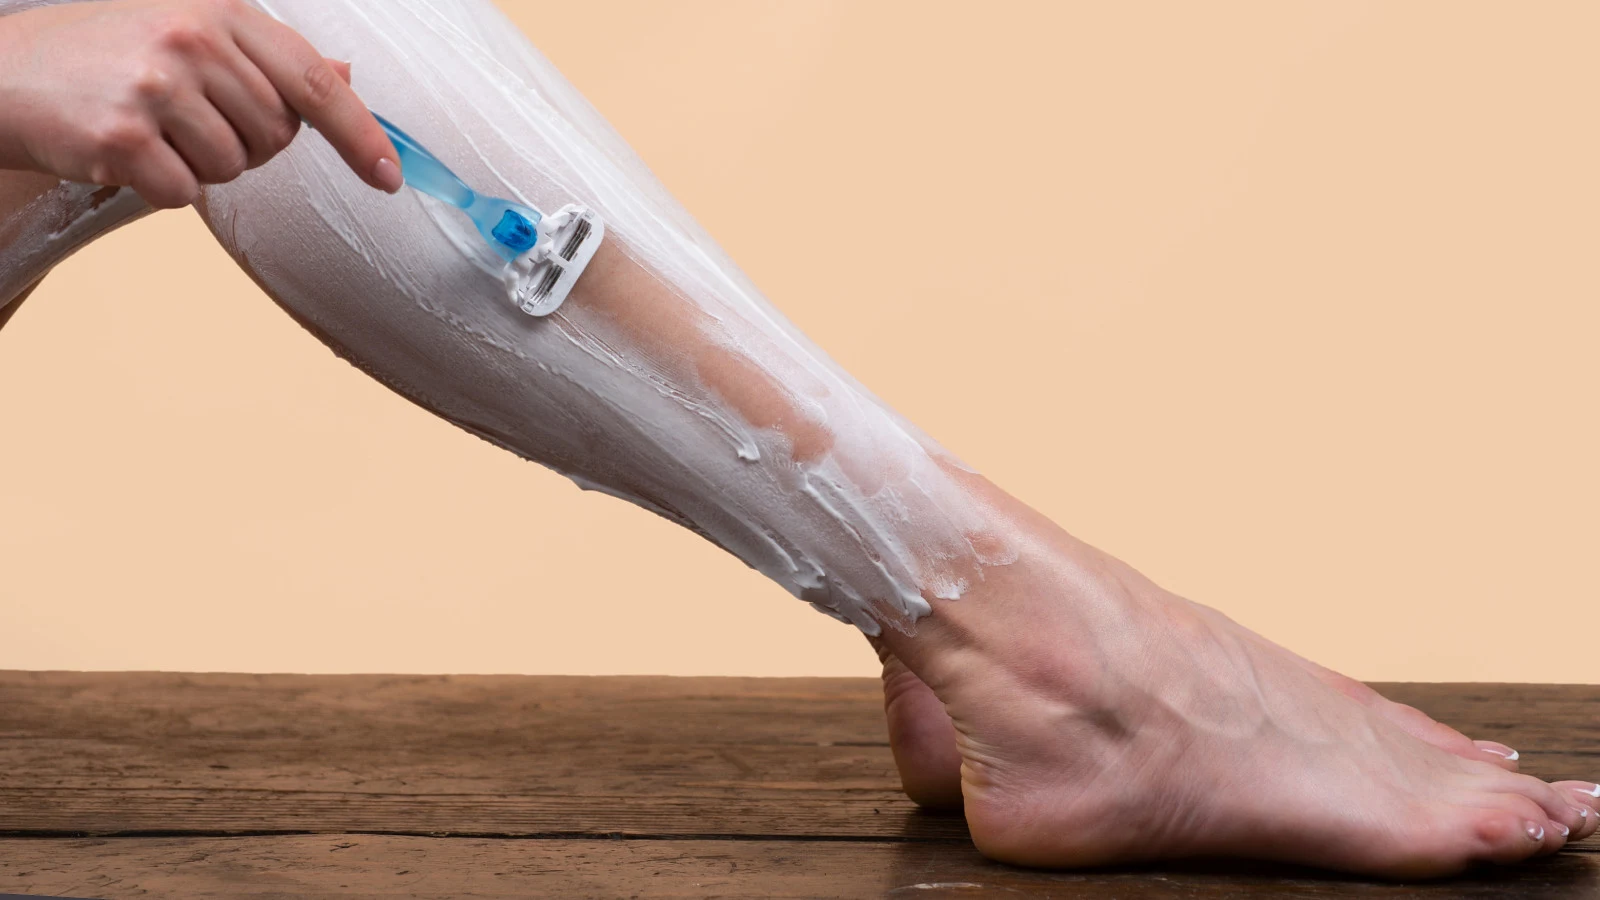 Woman shaving her legs with shaving gel